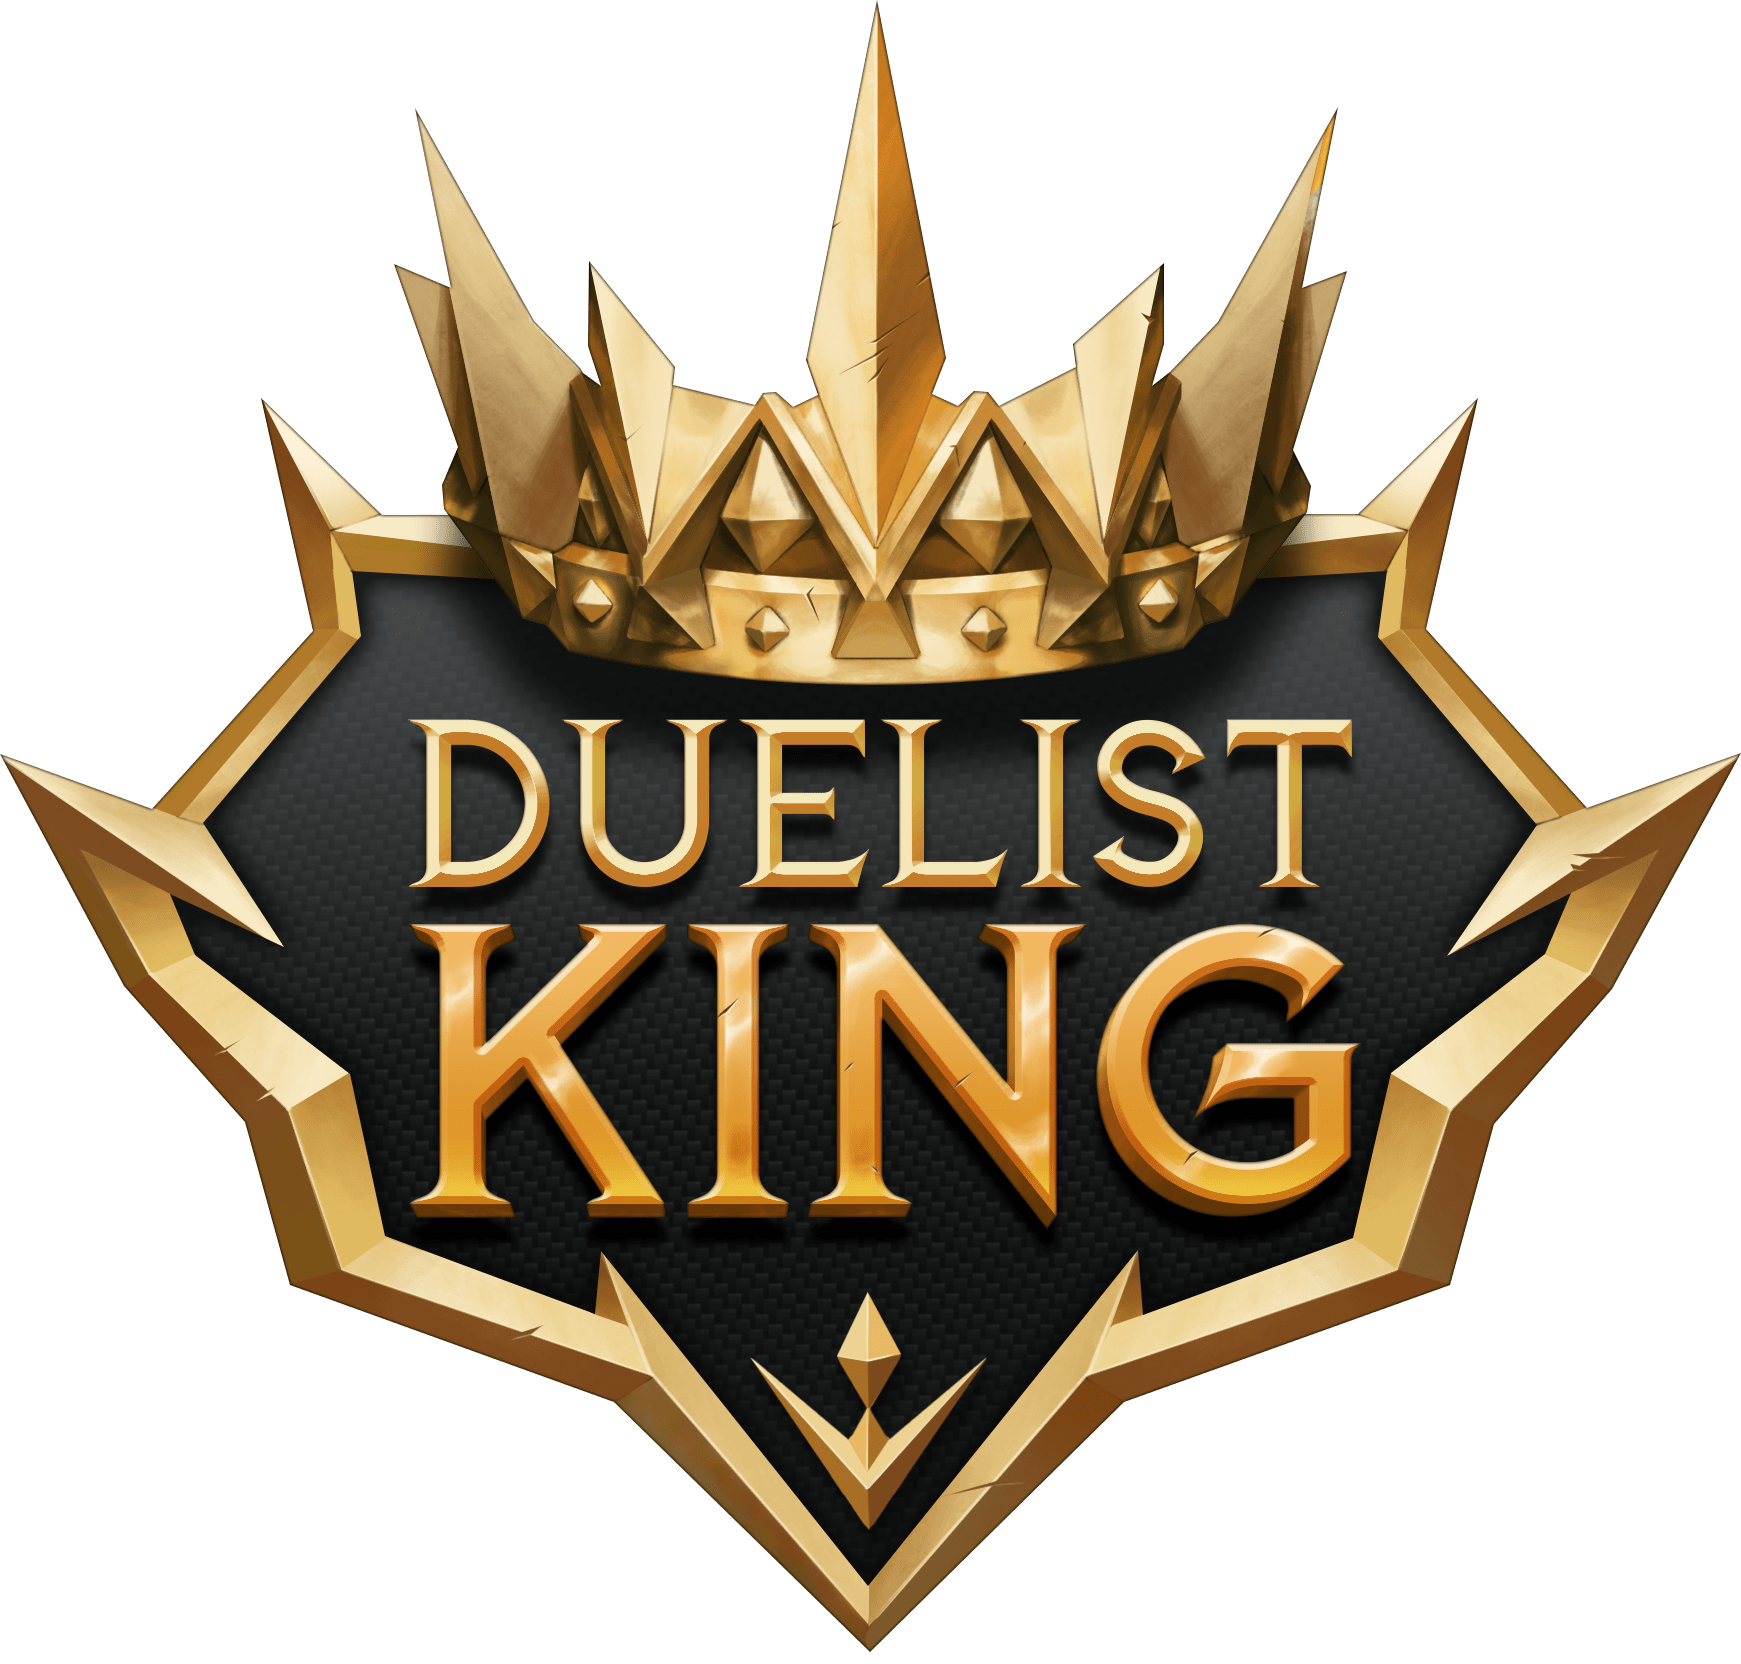 Duelist King logo